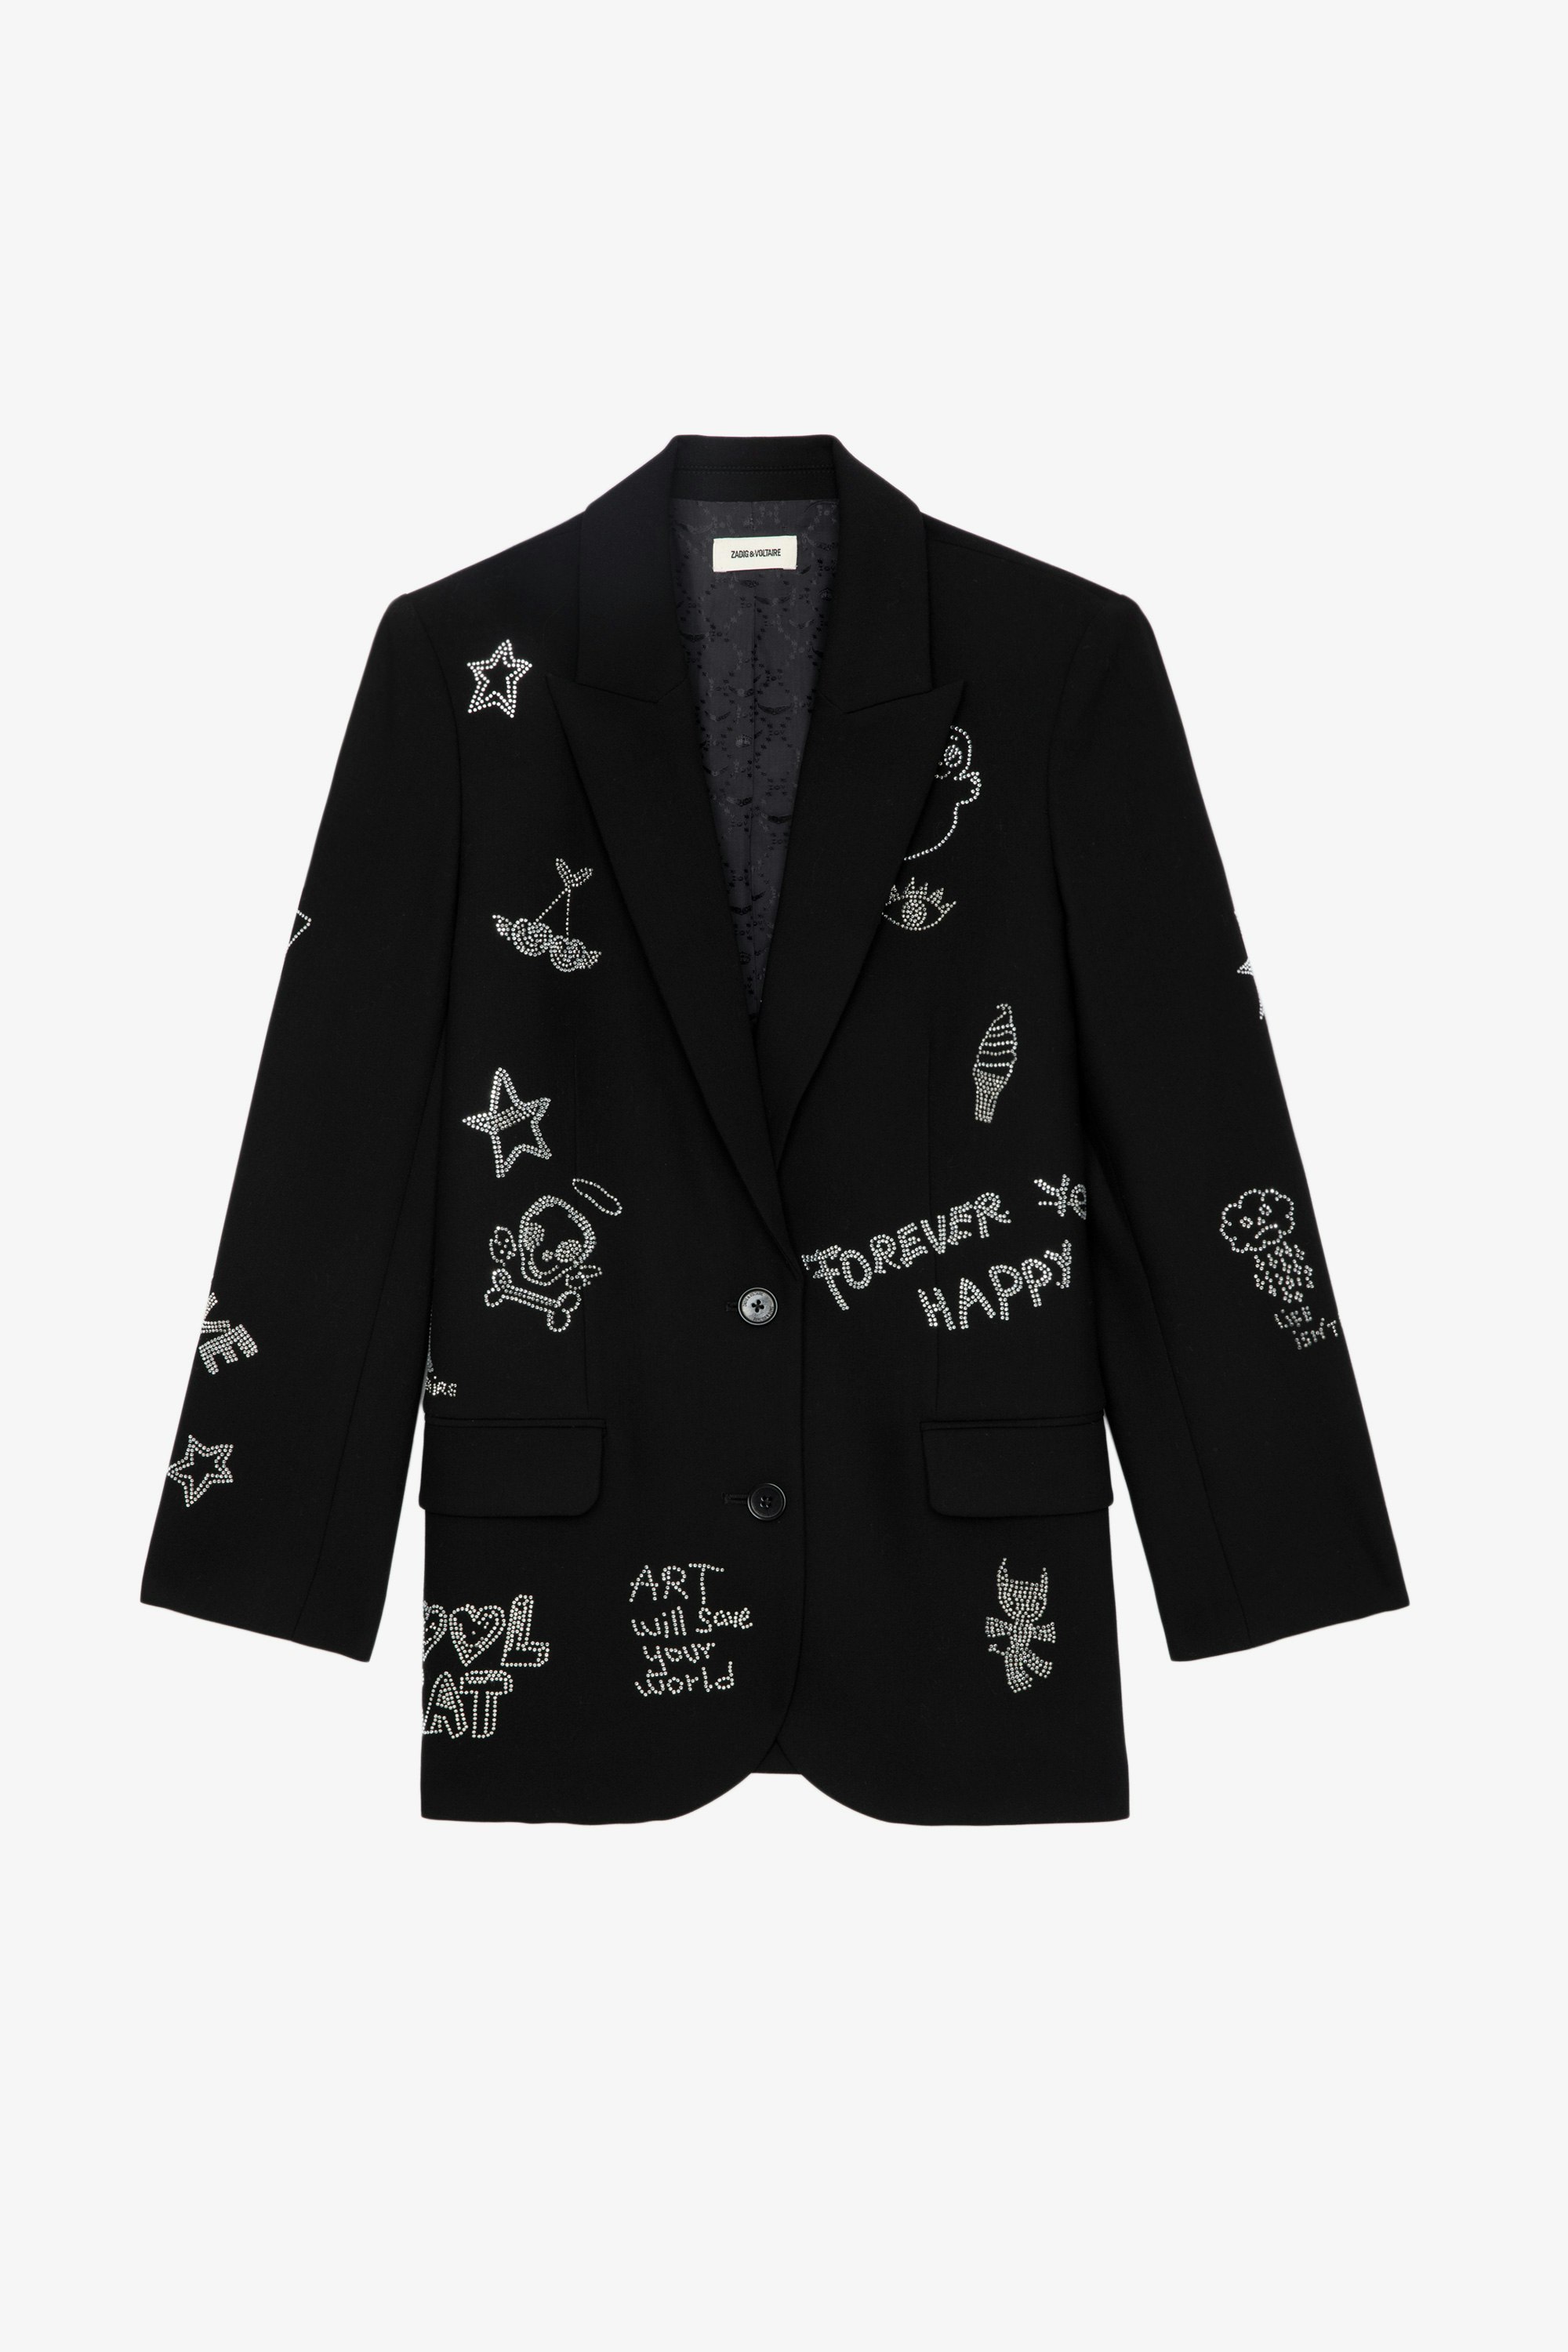 Viva Diamanté Blazer - Black blazer with button closure, pockets and diamanté customised details designed by Humberto Cruz.